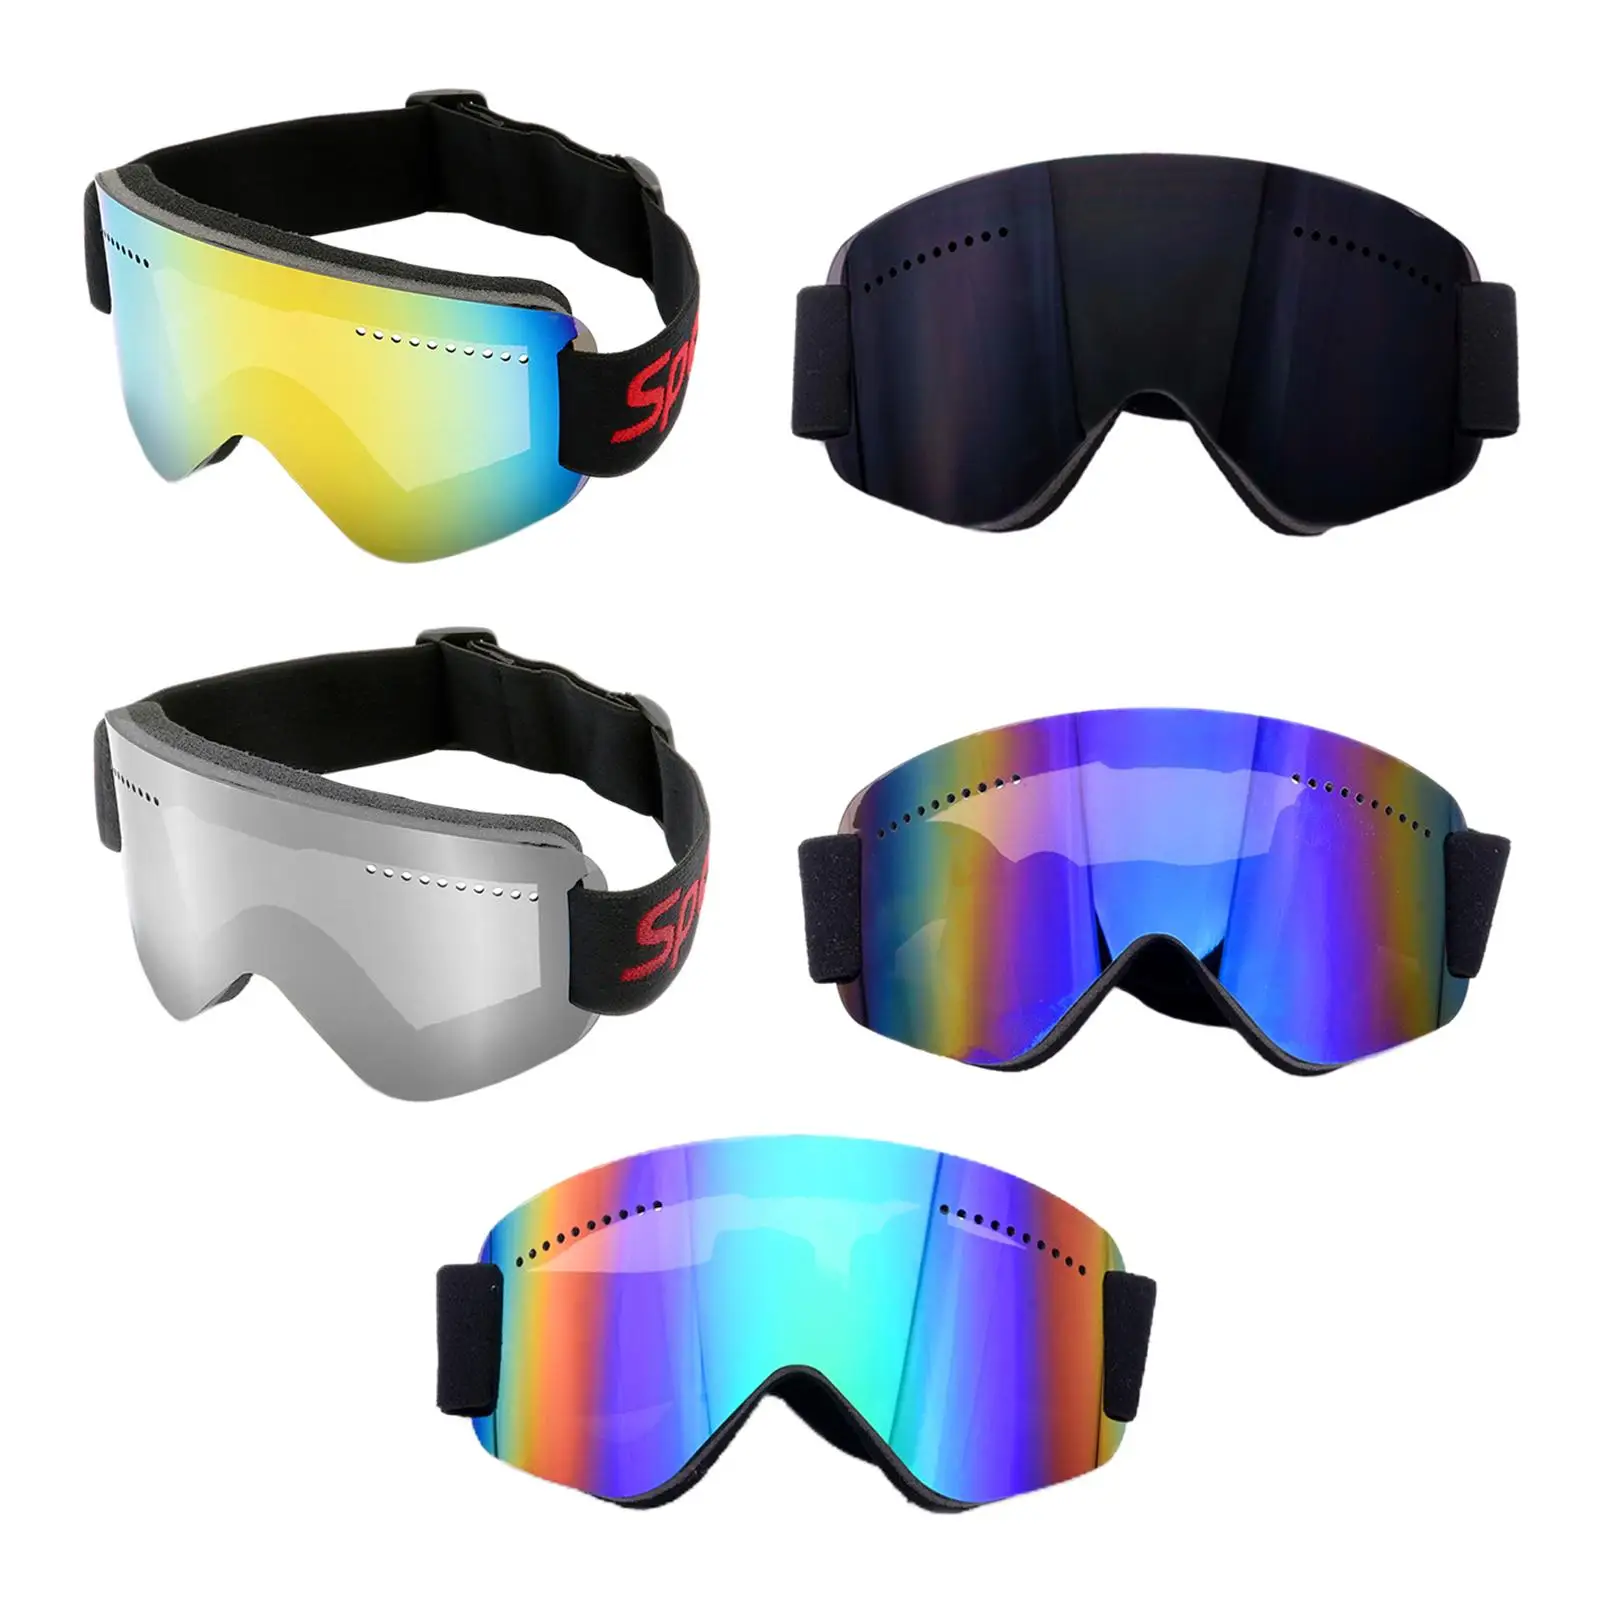 Ski Goggles UV Protection Adult Eyewear Over Glasses for Snow Sports Skating